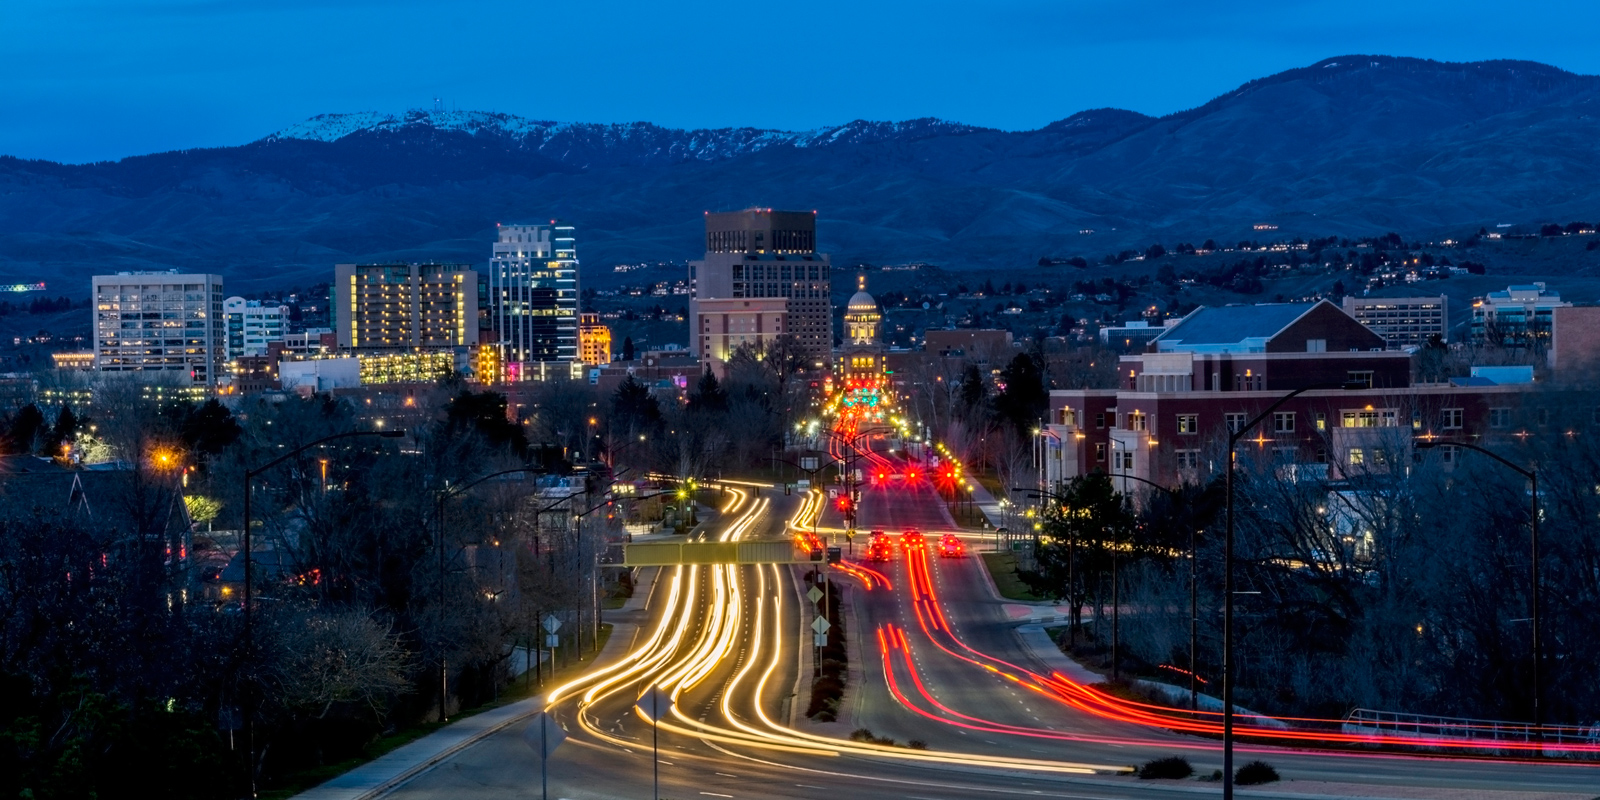 Night city view in Boise, Idaho